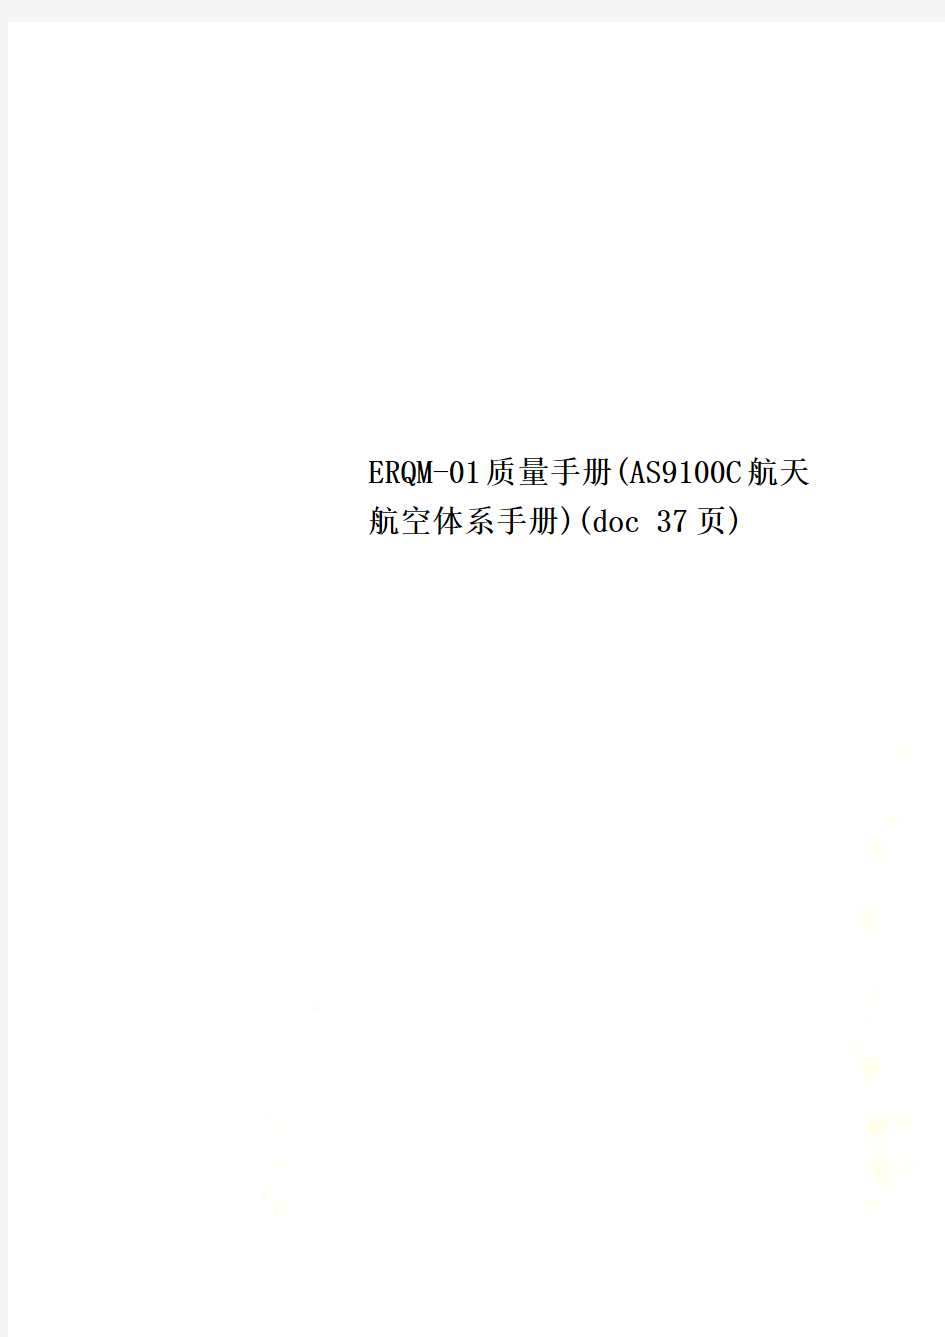 ERQM-01质量手册(AS9100C航天航空体系手册)(doc 37页)